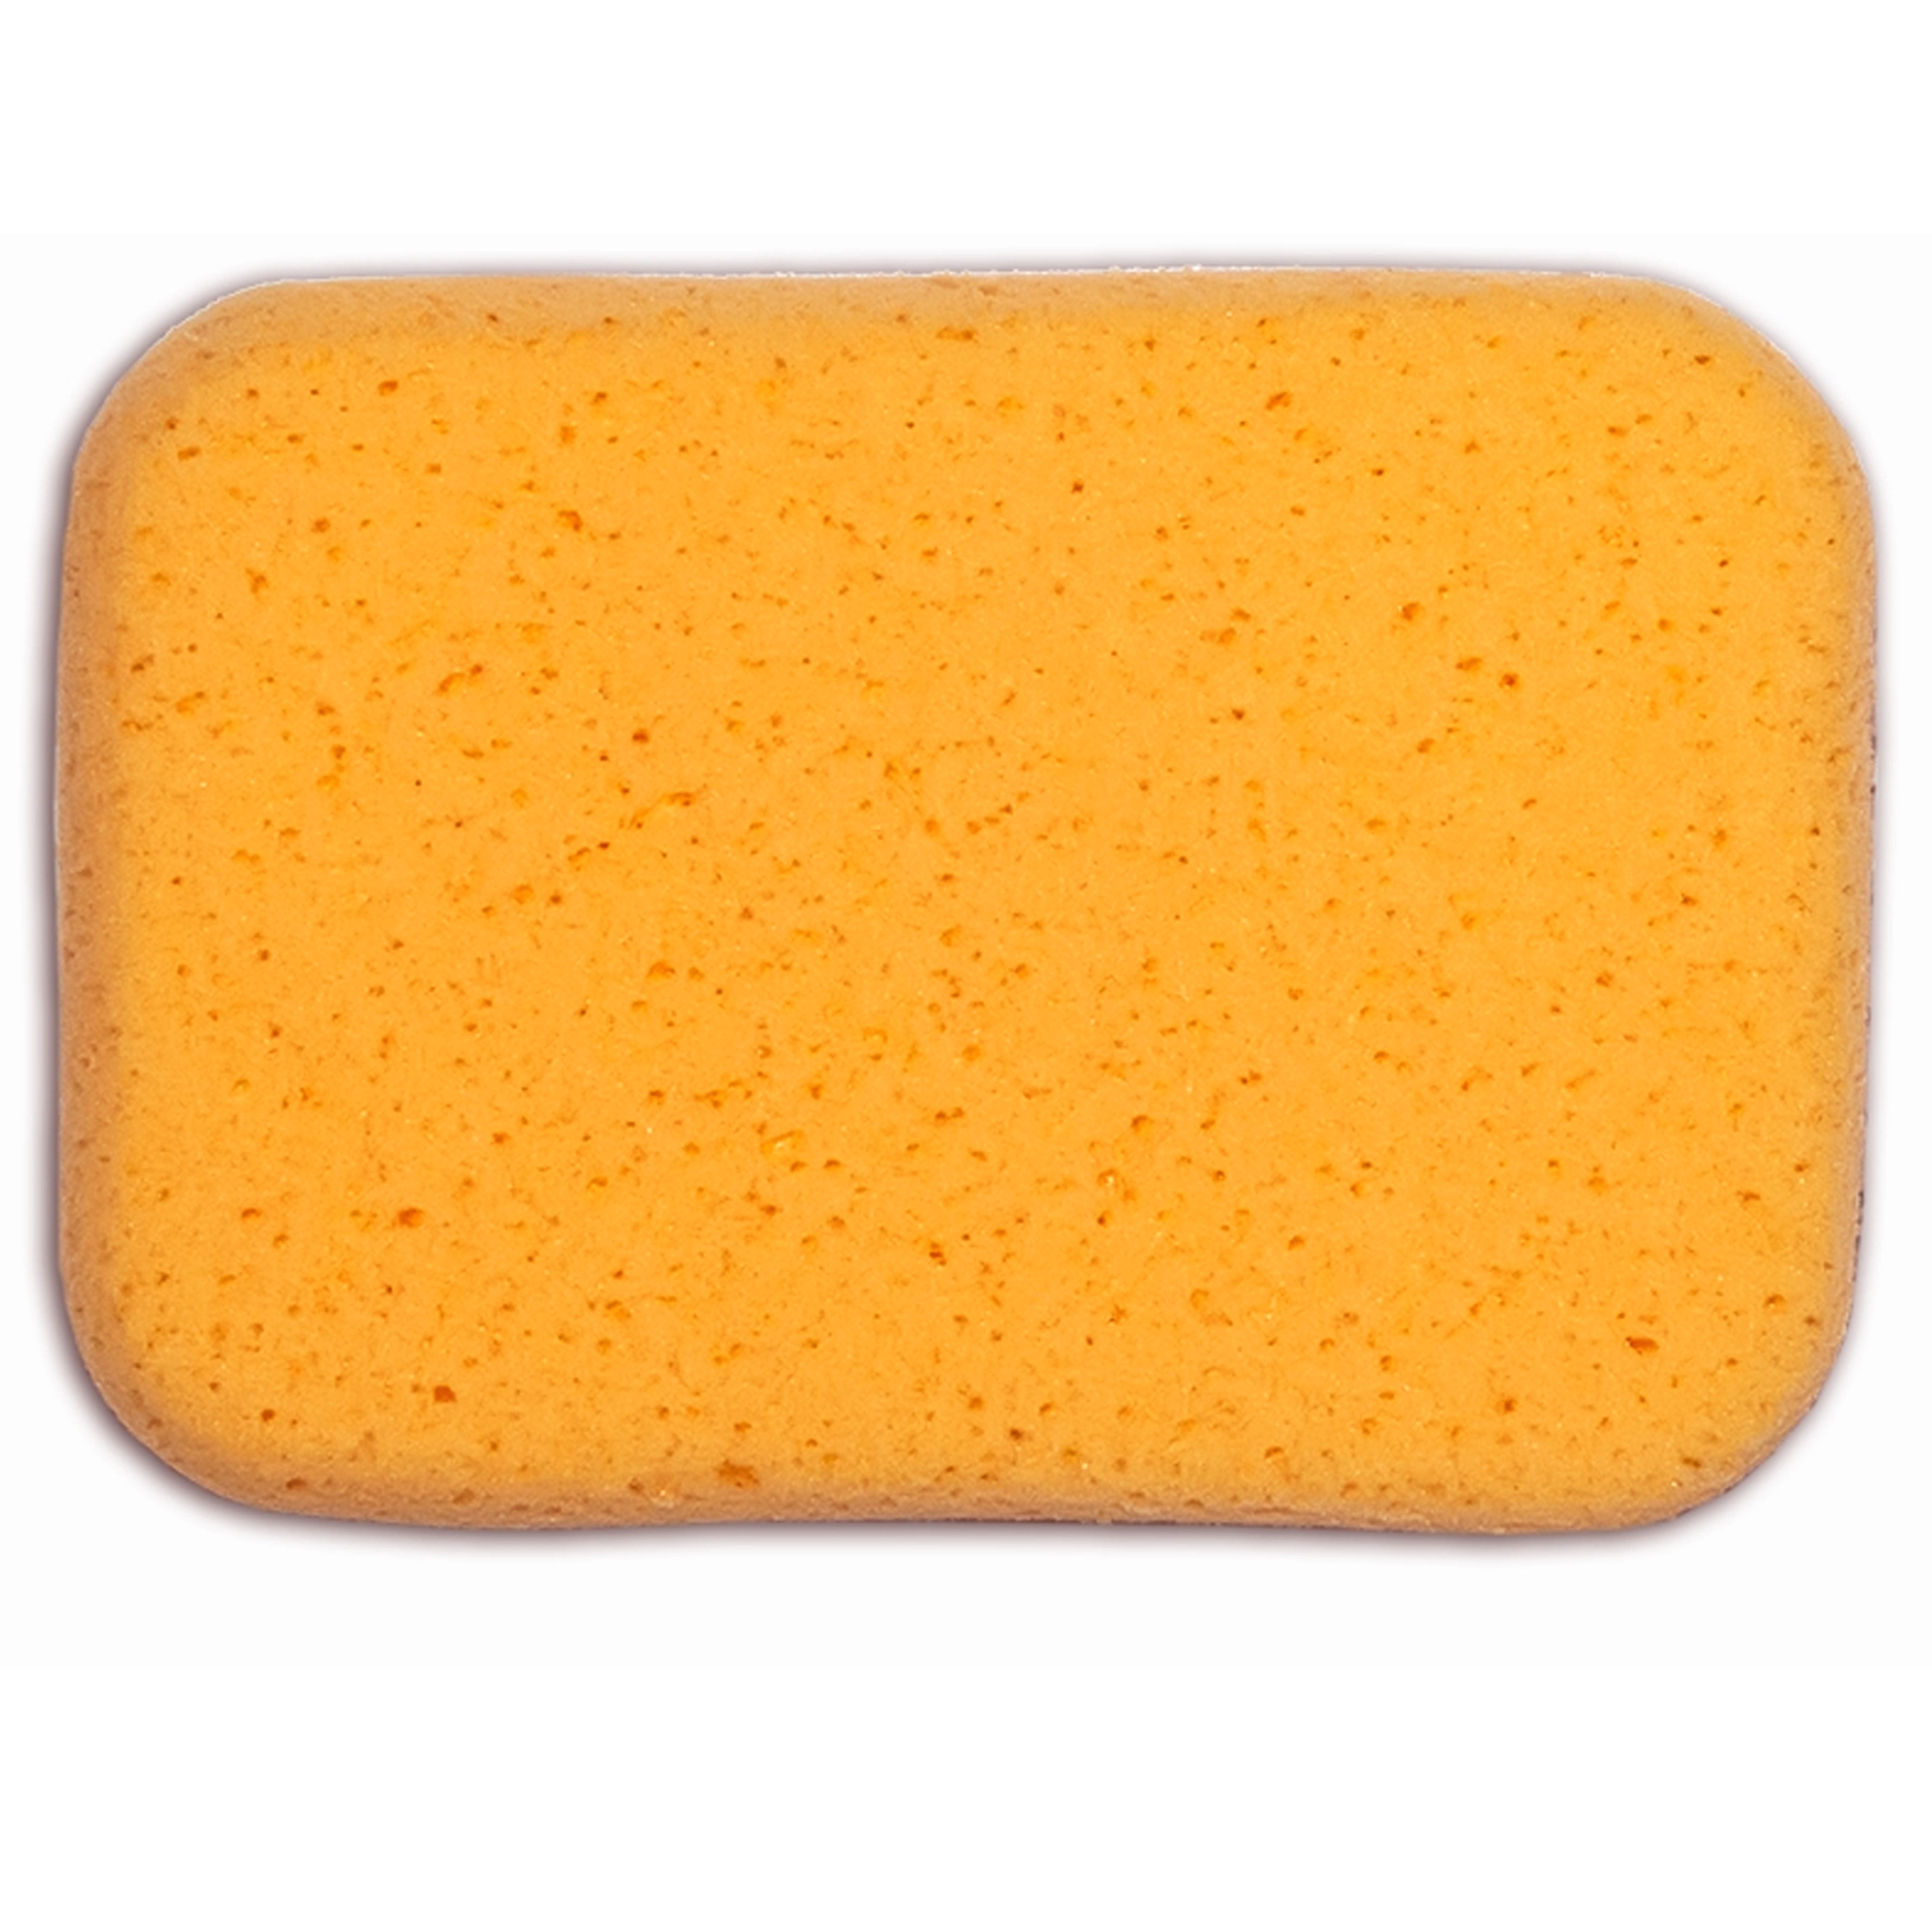 2Pcs Large Cross Cut Durable Soft Foam Grid Sponge Rinseless